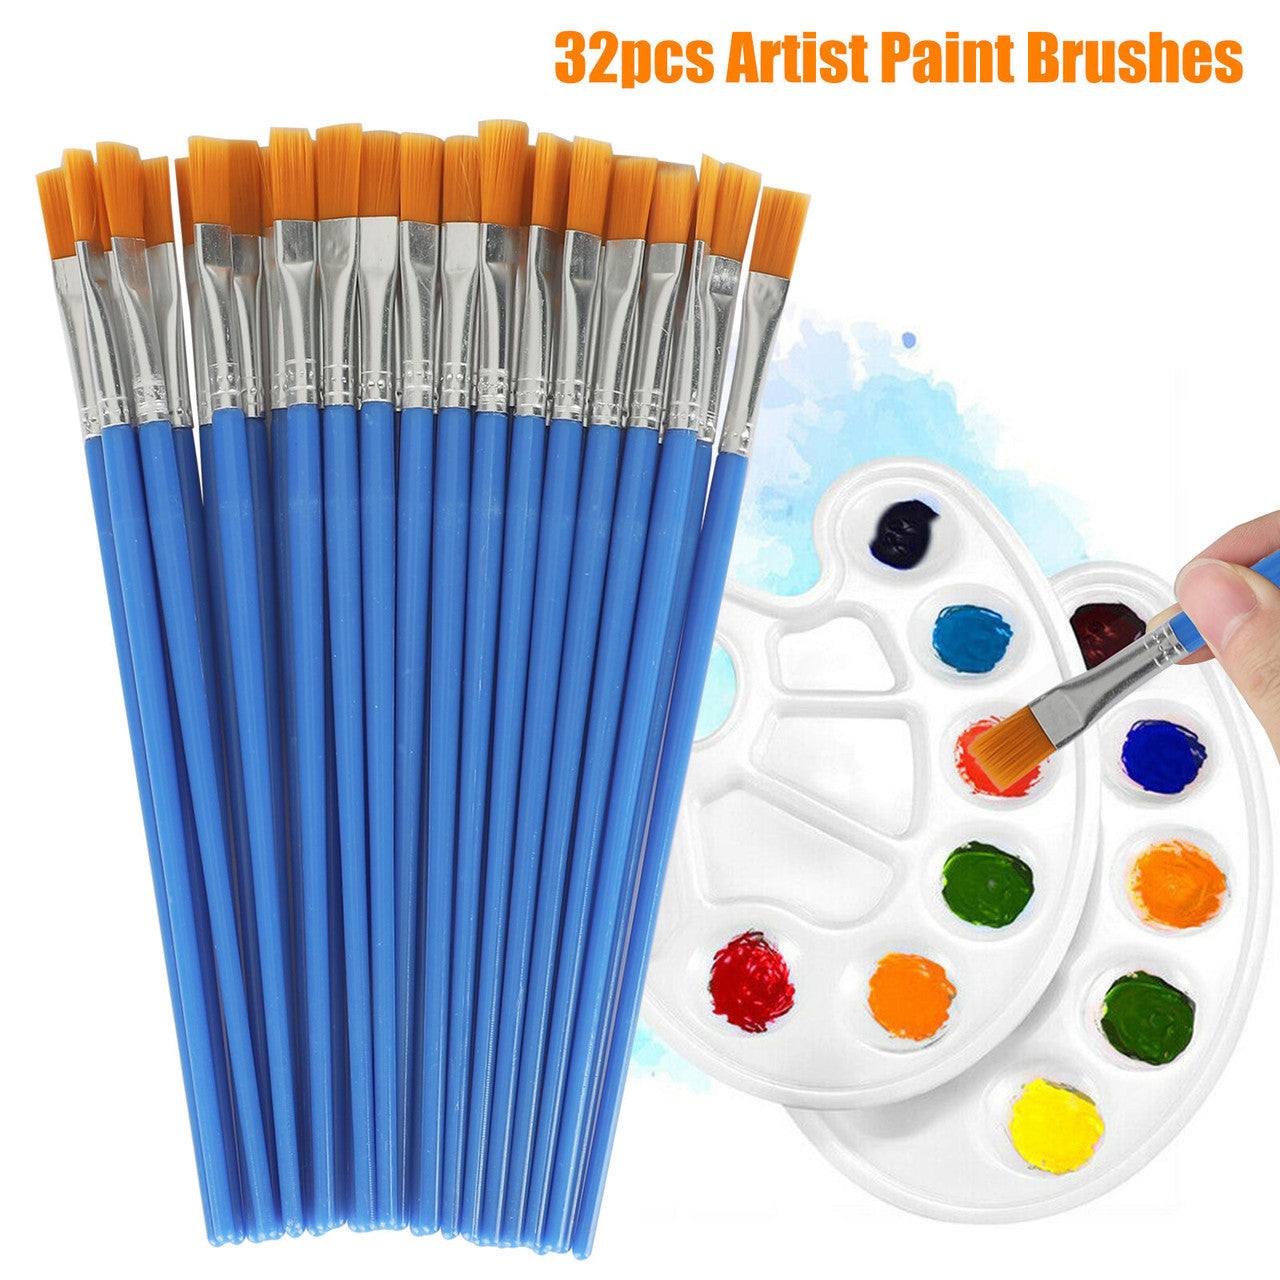 Paint Brushes Set, Flat Paintbrushes Nylon Hair Artist Acrylic Professional Paint Brushes for Acrylic Oil Watercolor, Face Nail Art, Miniature Detailing & Rock Painting, 32Pcs